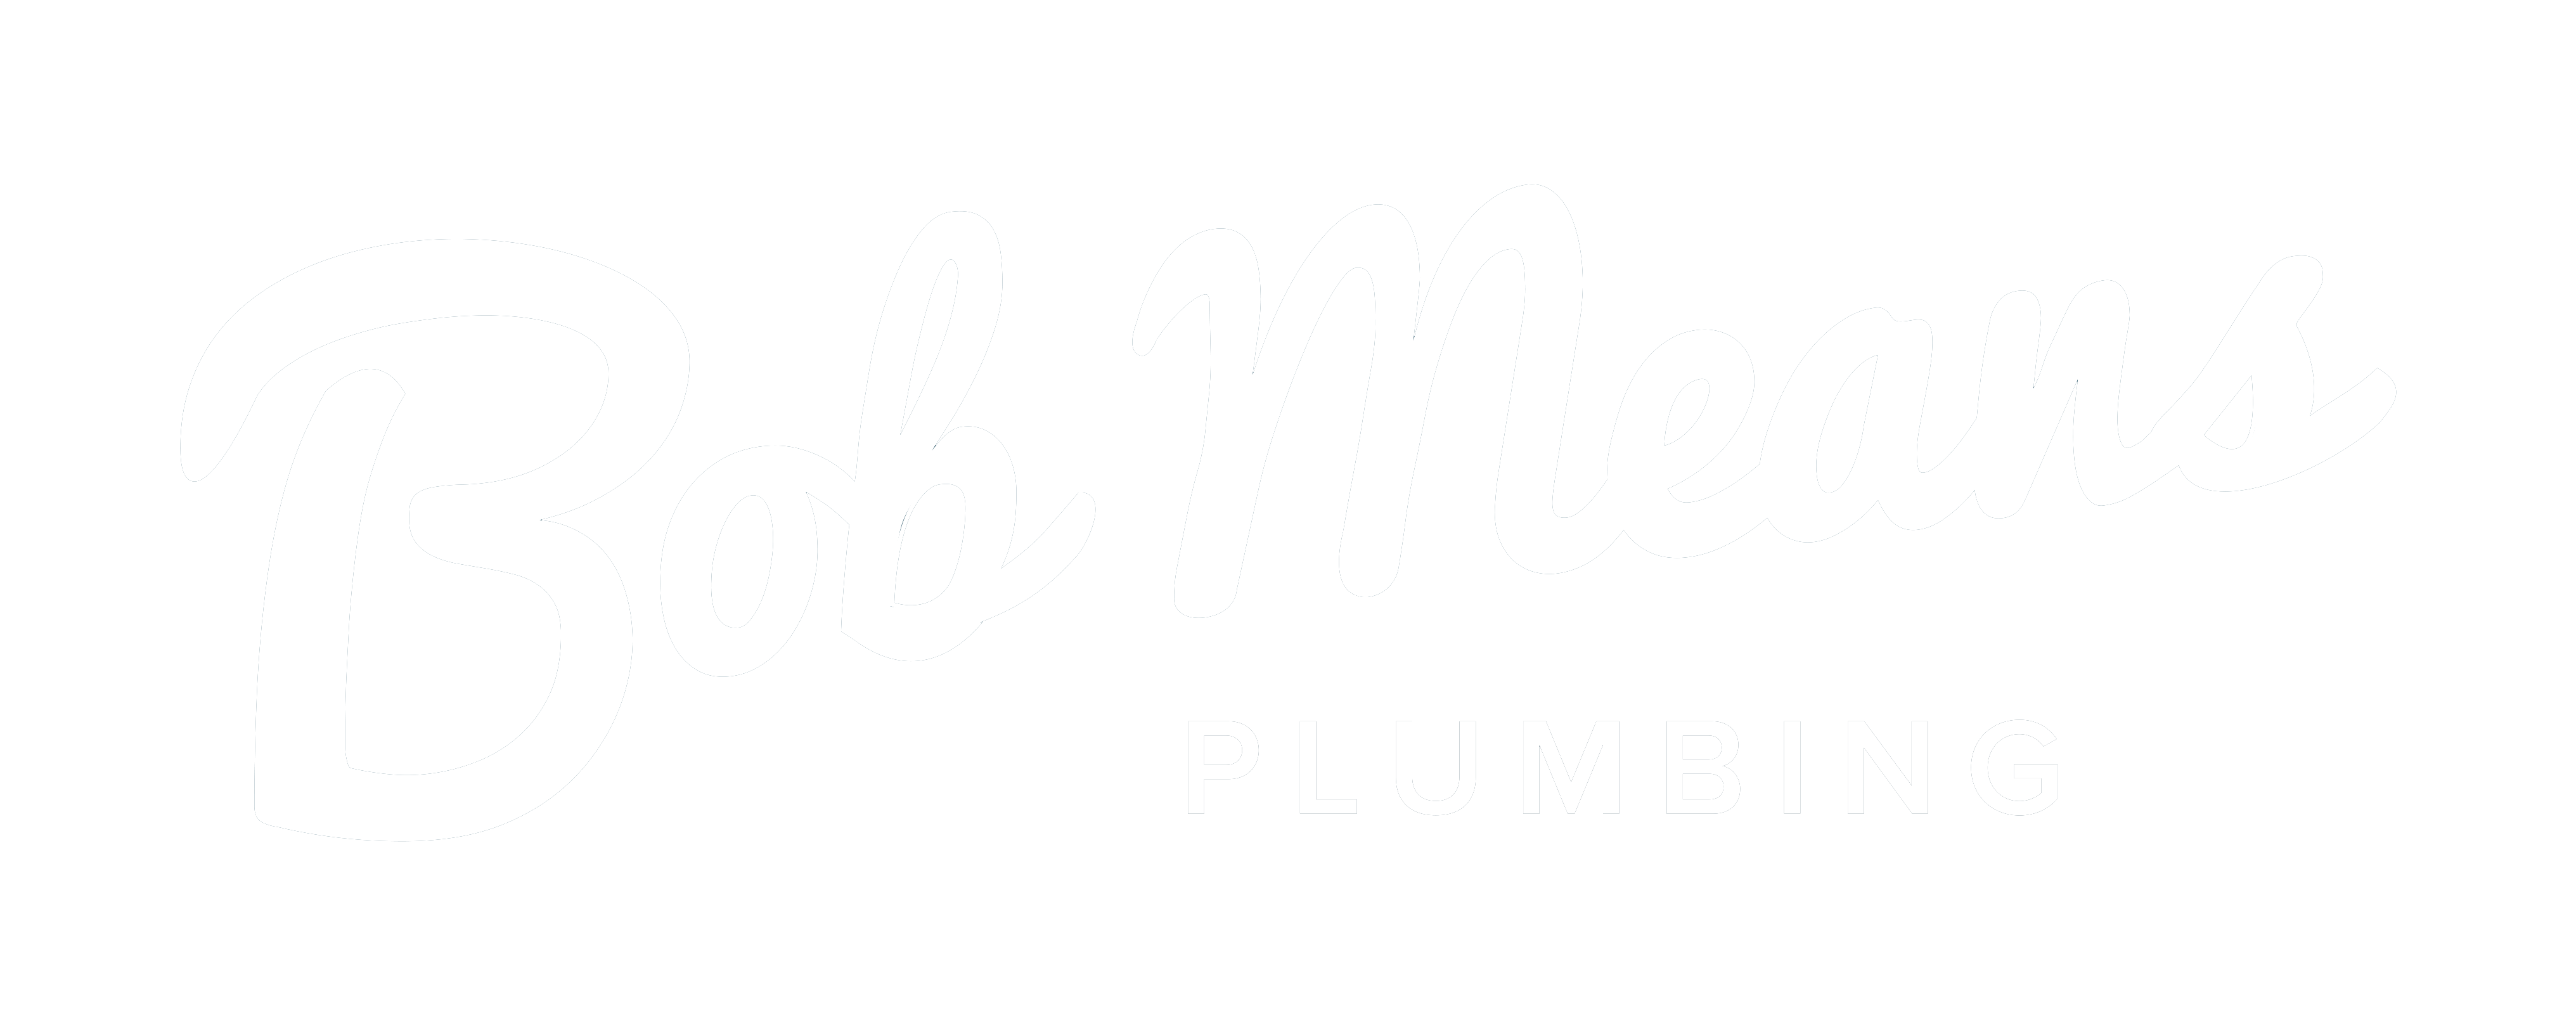 Bob Means Plumbing